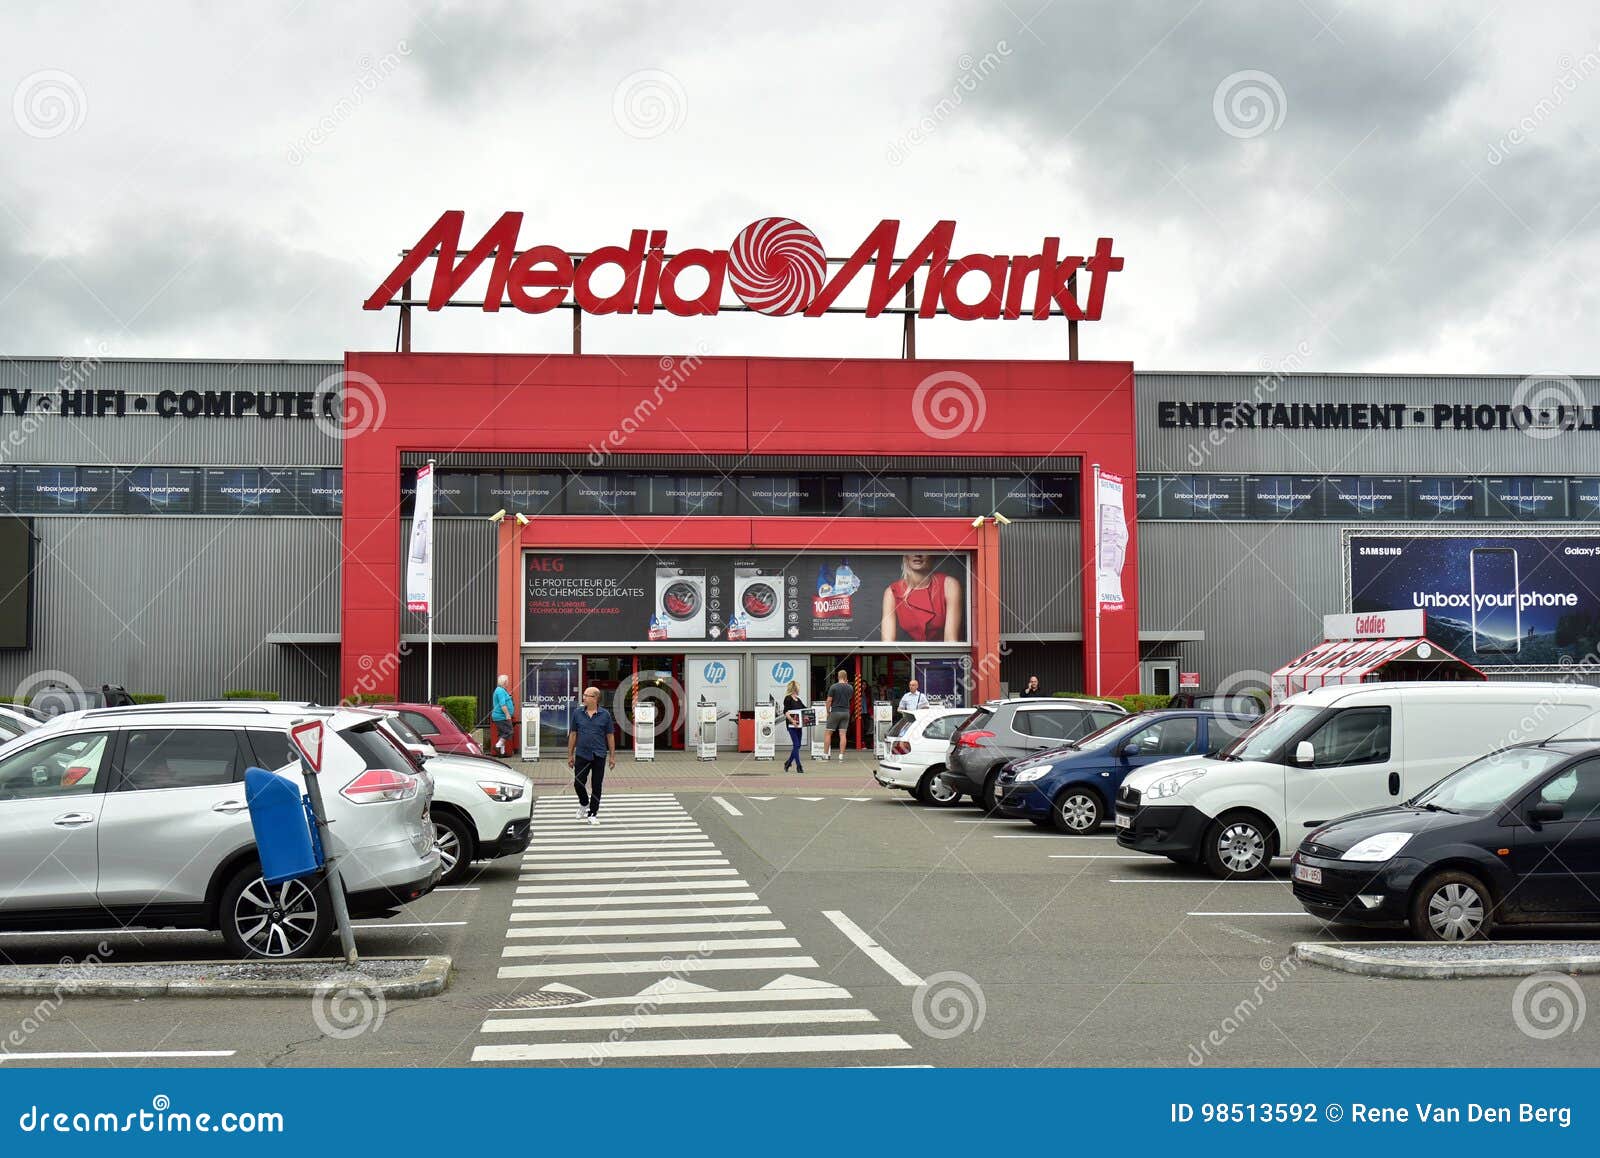 MediaMarkt expands compact Xpress concept to Belgium - RetailDetail EU